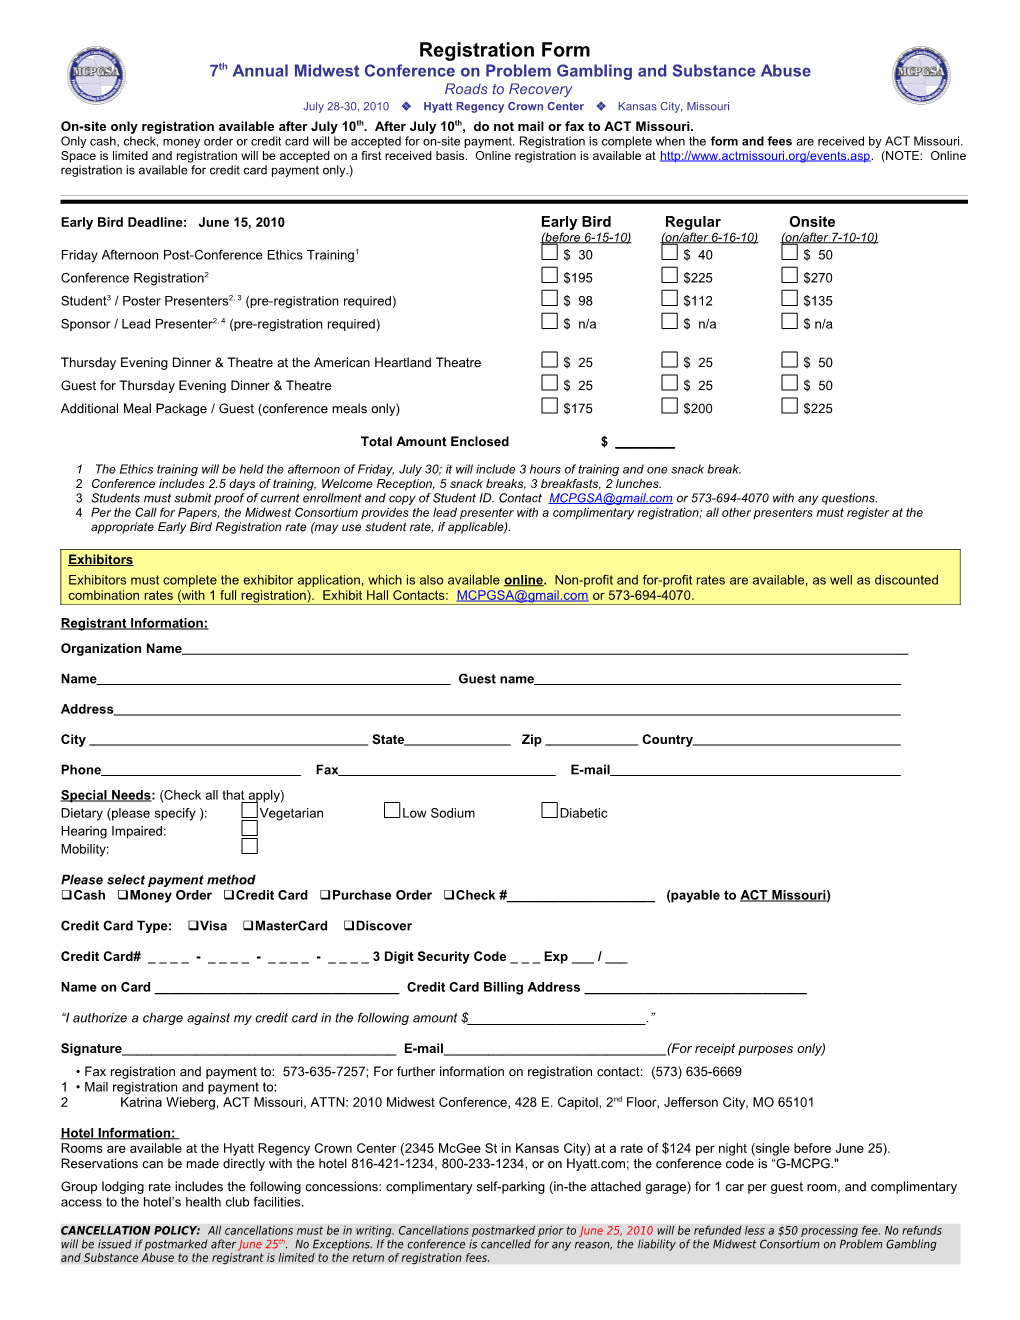 Conference Registration Form/Fees